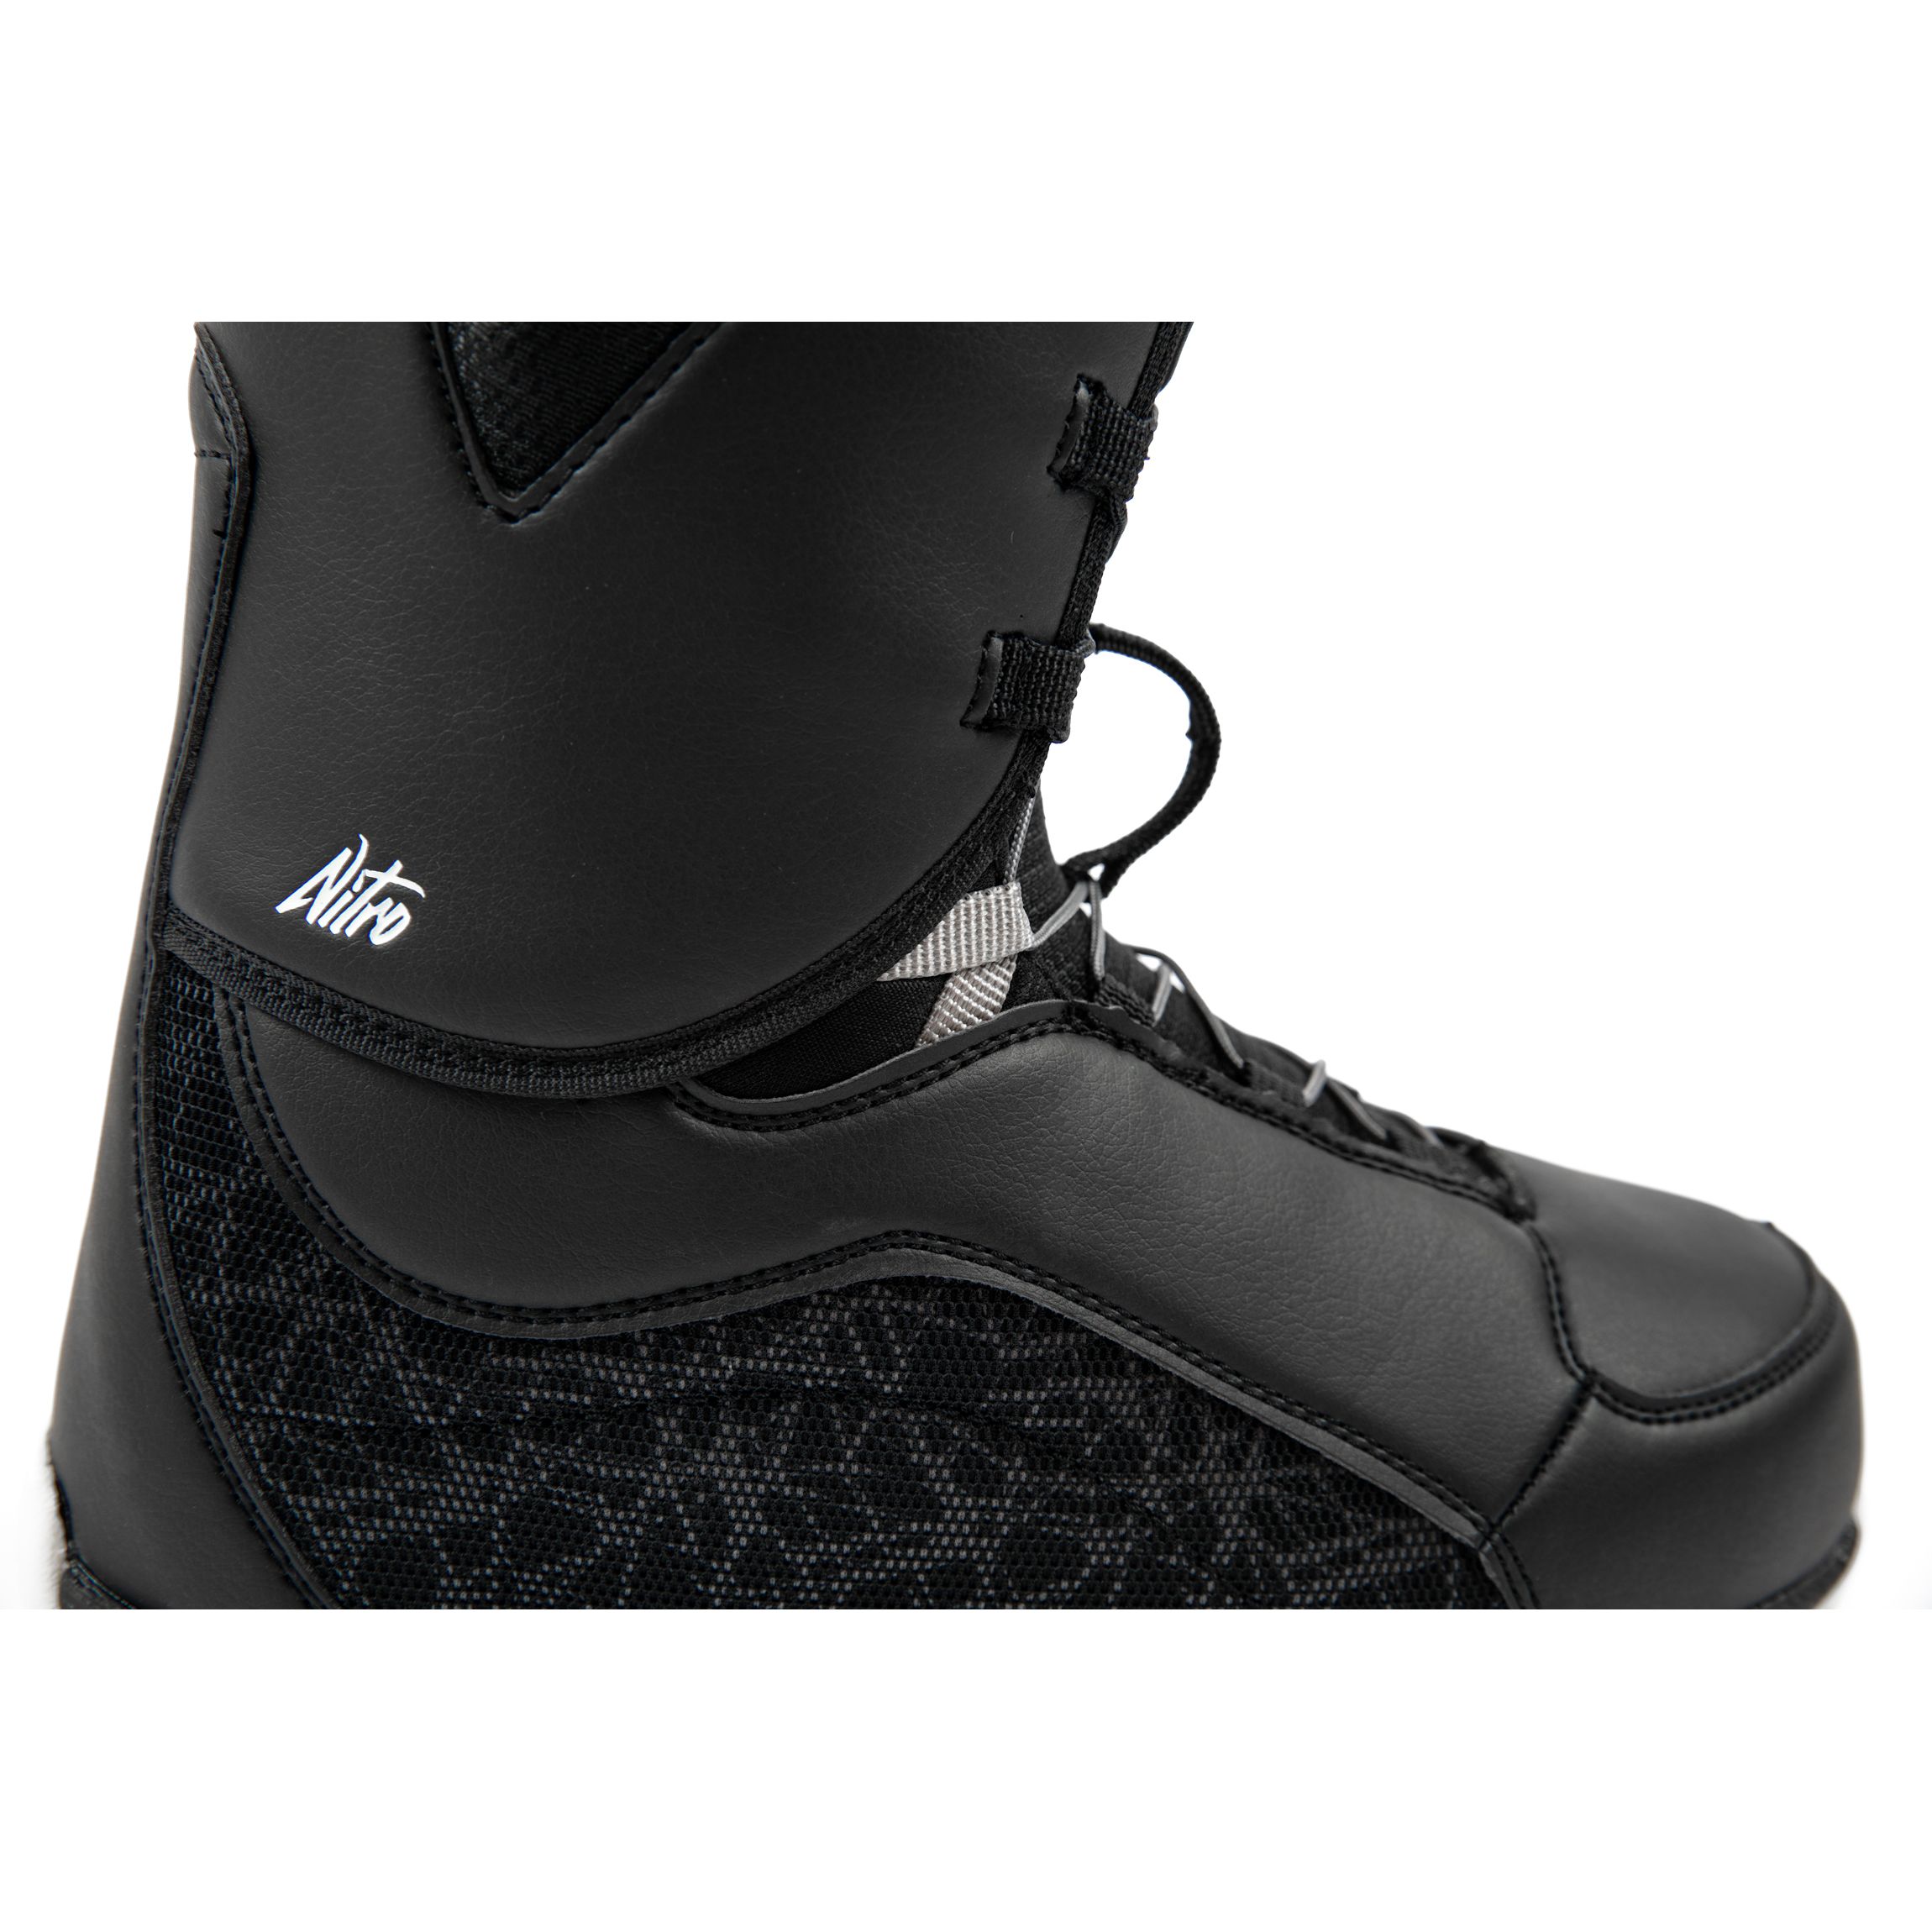 Boots Snowboard -  nitro Futura TLS